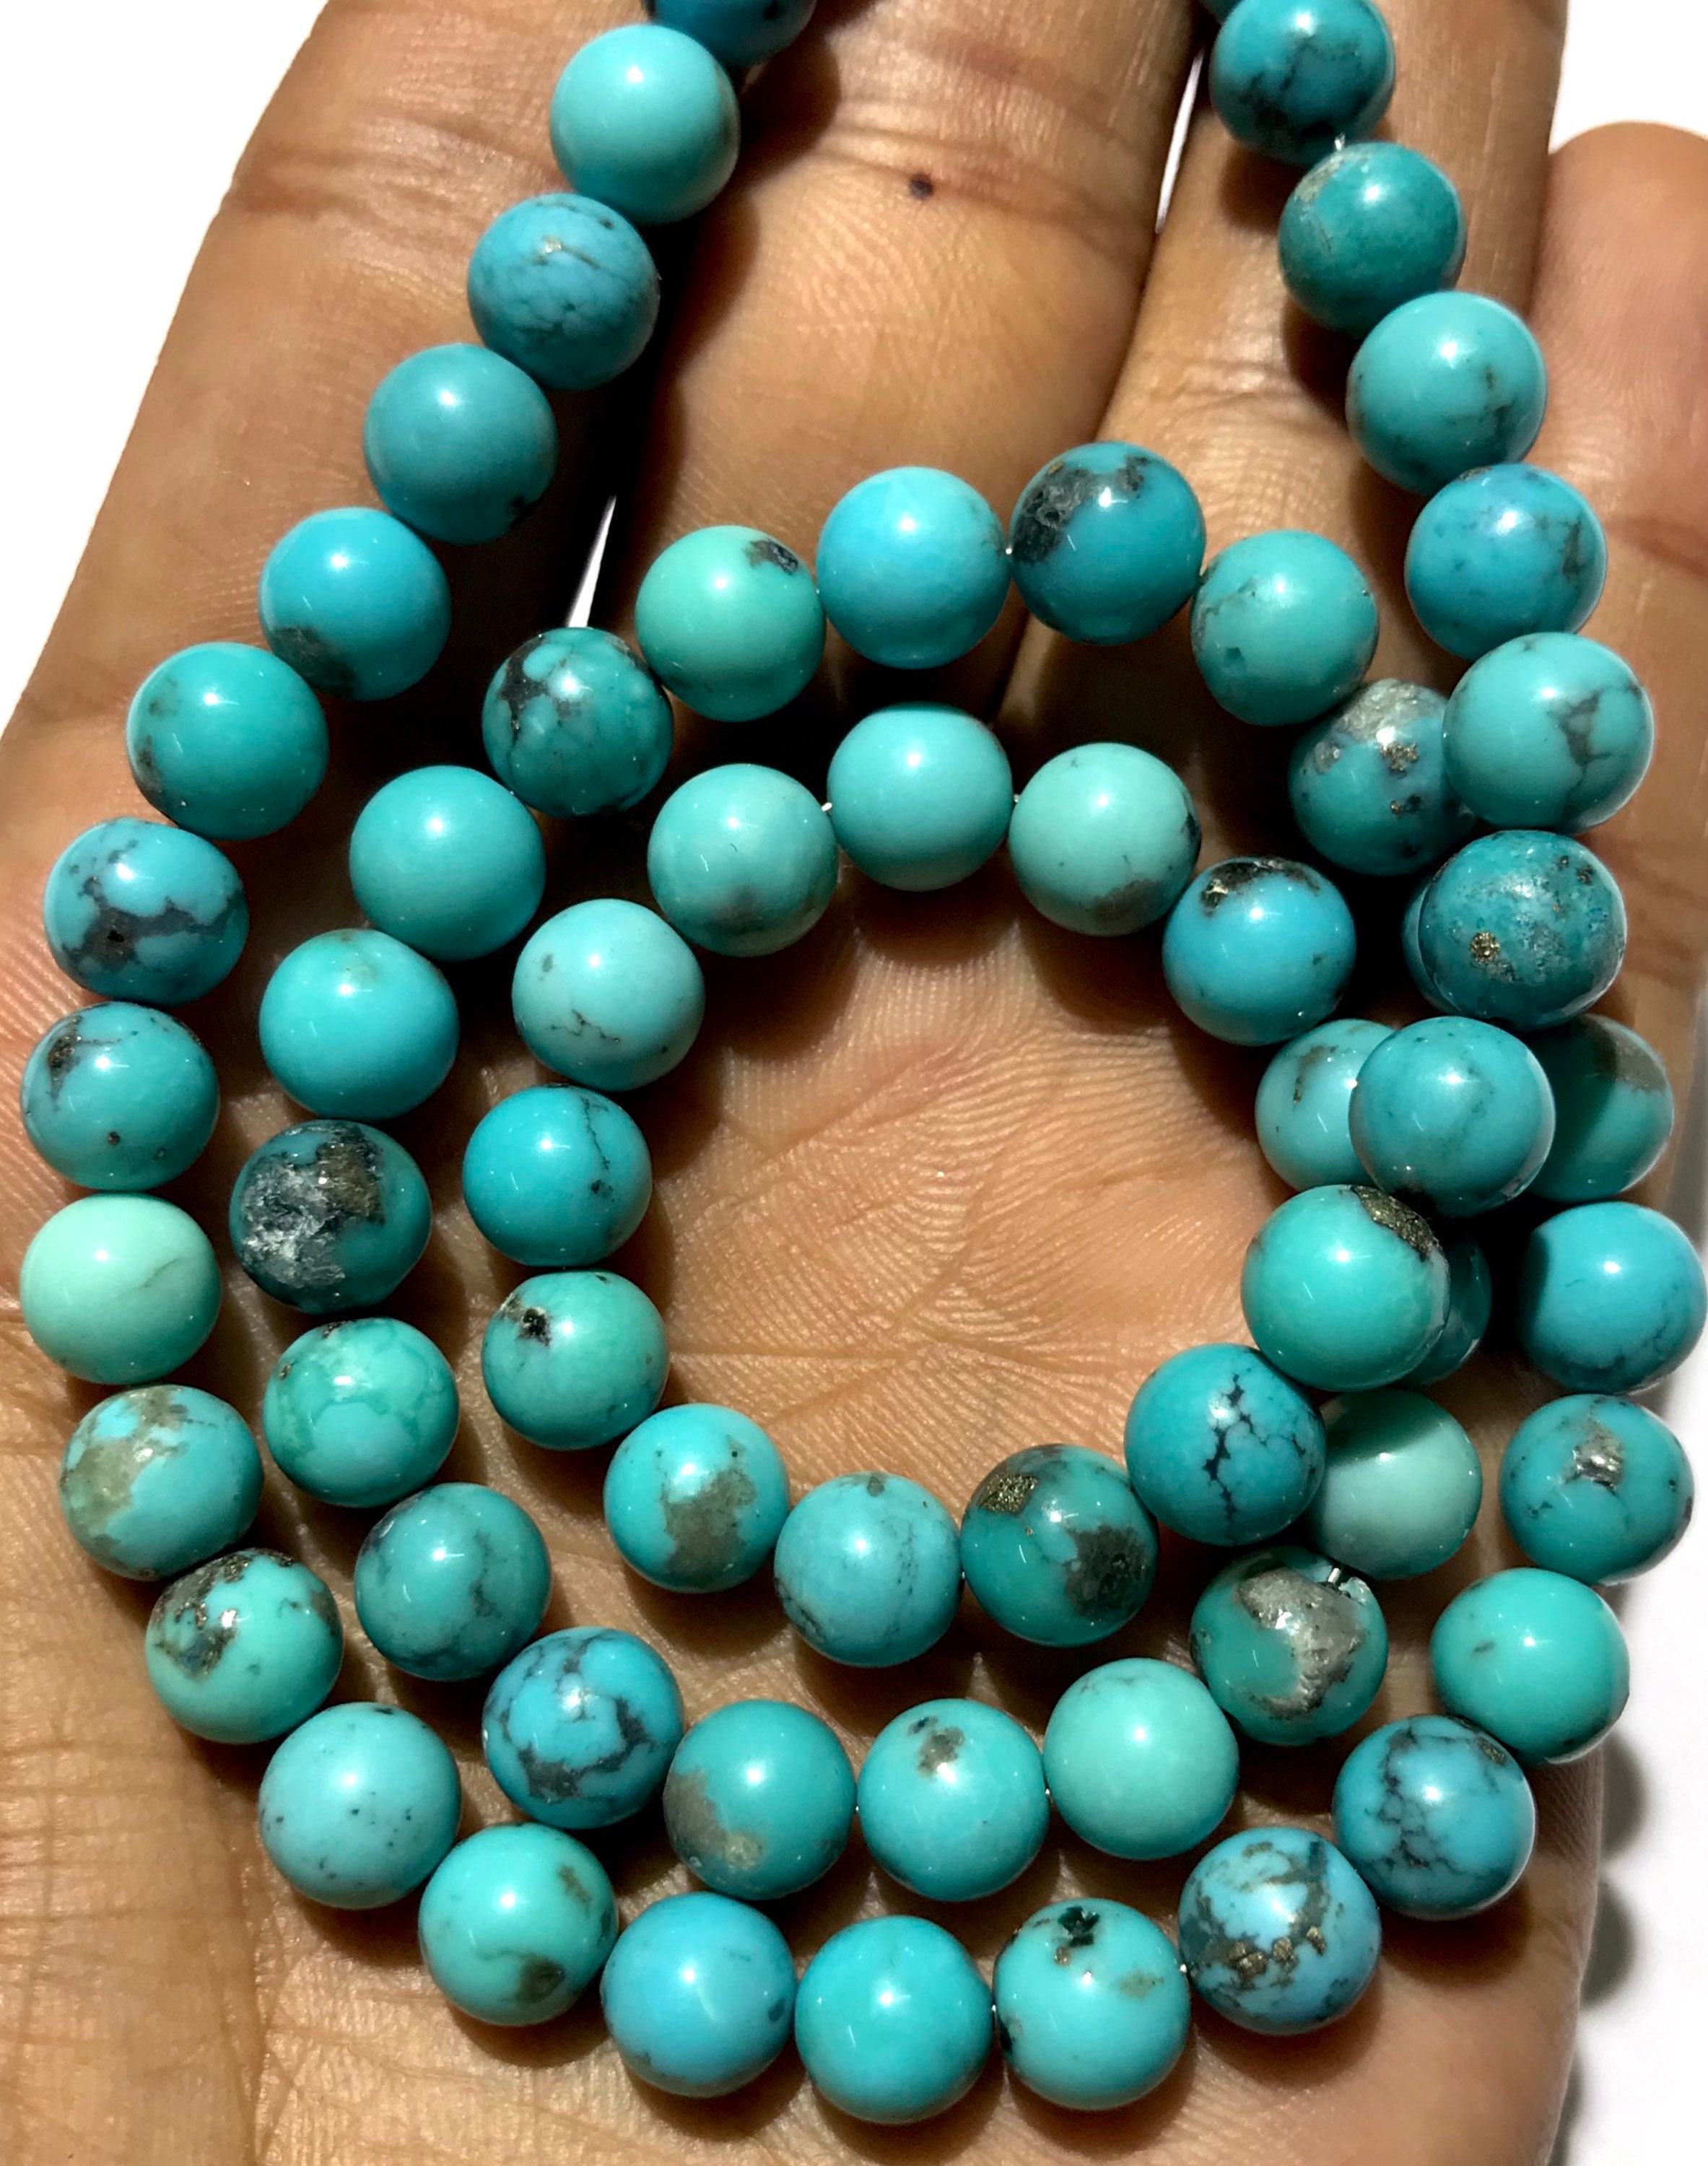  MOKYYus Blue Turquoise Beads, 8mm Blue Turquoise